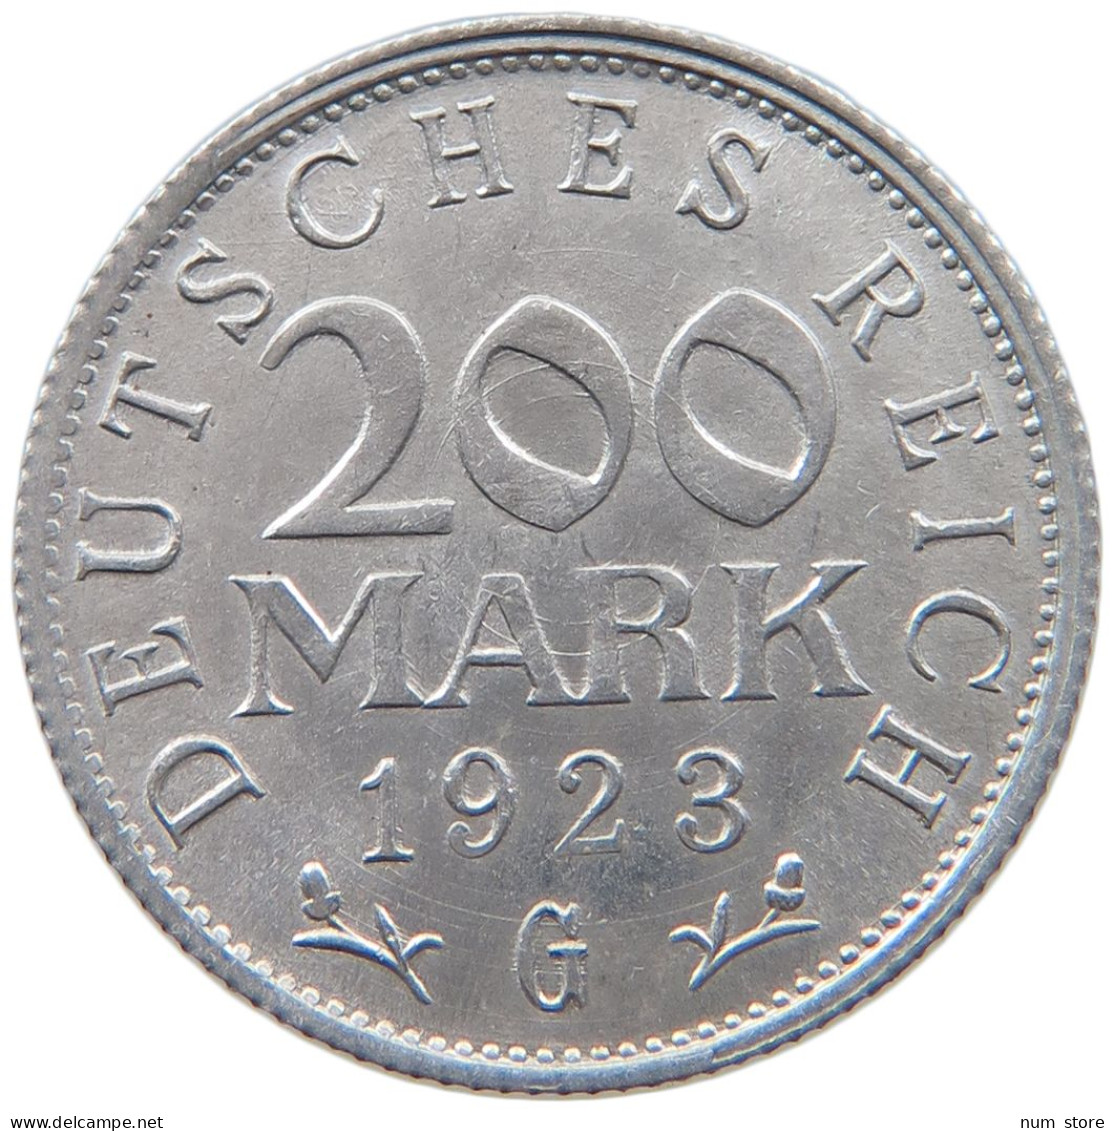 WEIMARER REPUBLIK 200 MARK 1923 G  #MA 098793 - 200 & 500 Mark